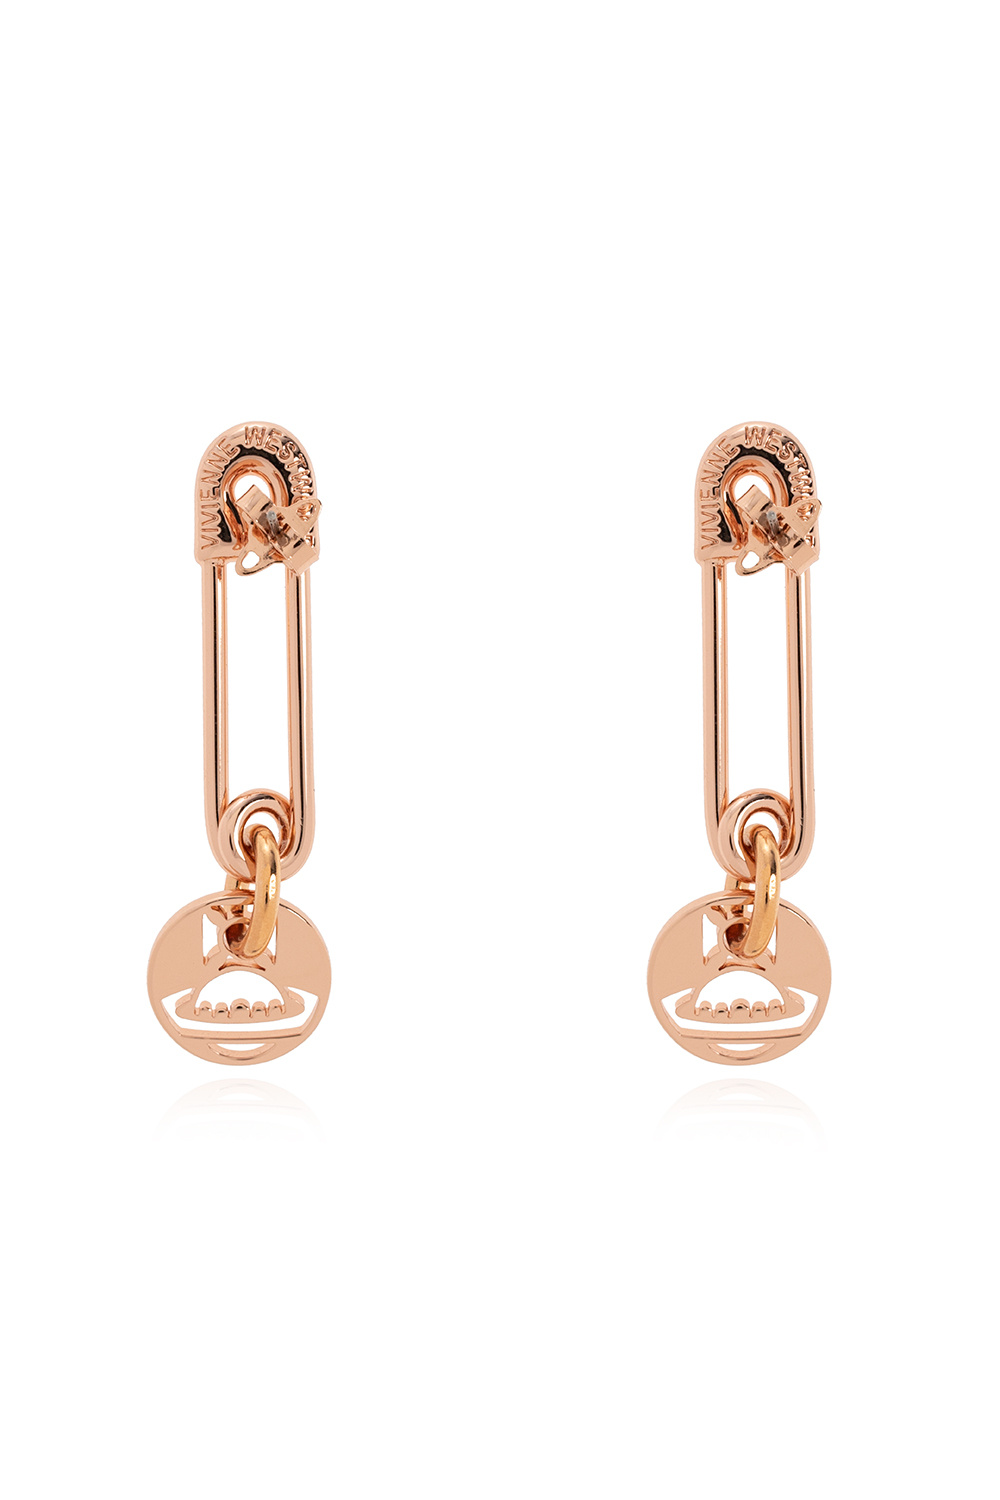 Vivienne Westwood ‘Imogene’ earrings with charm